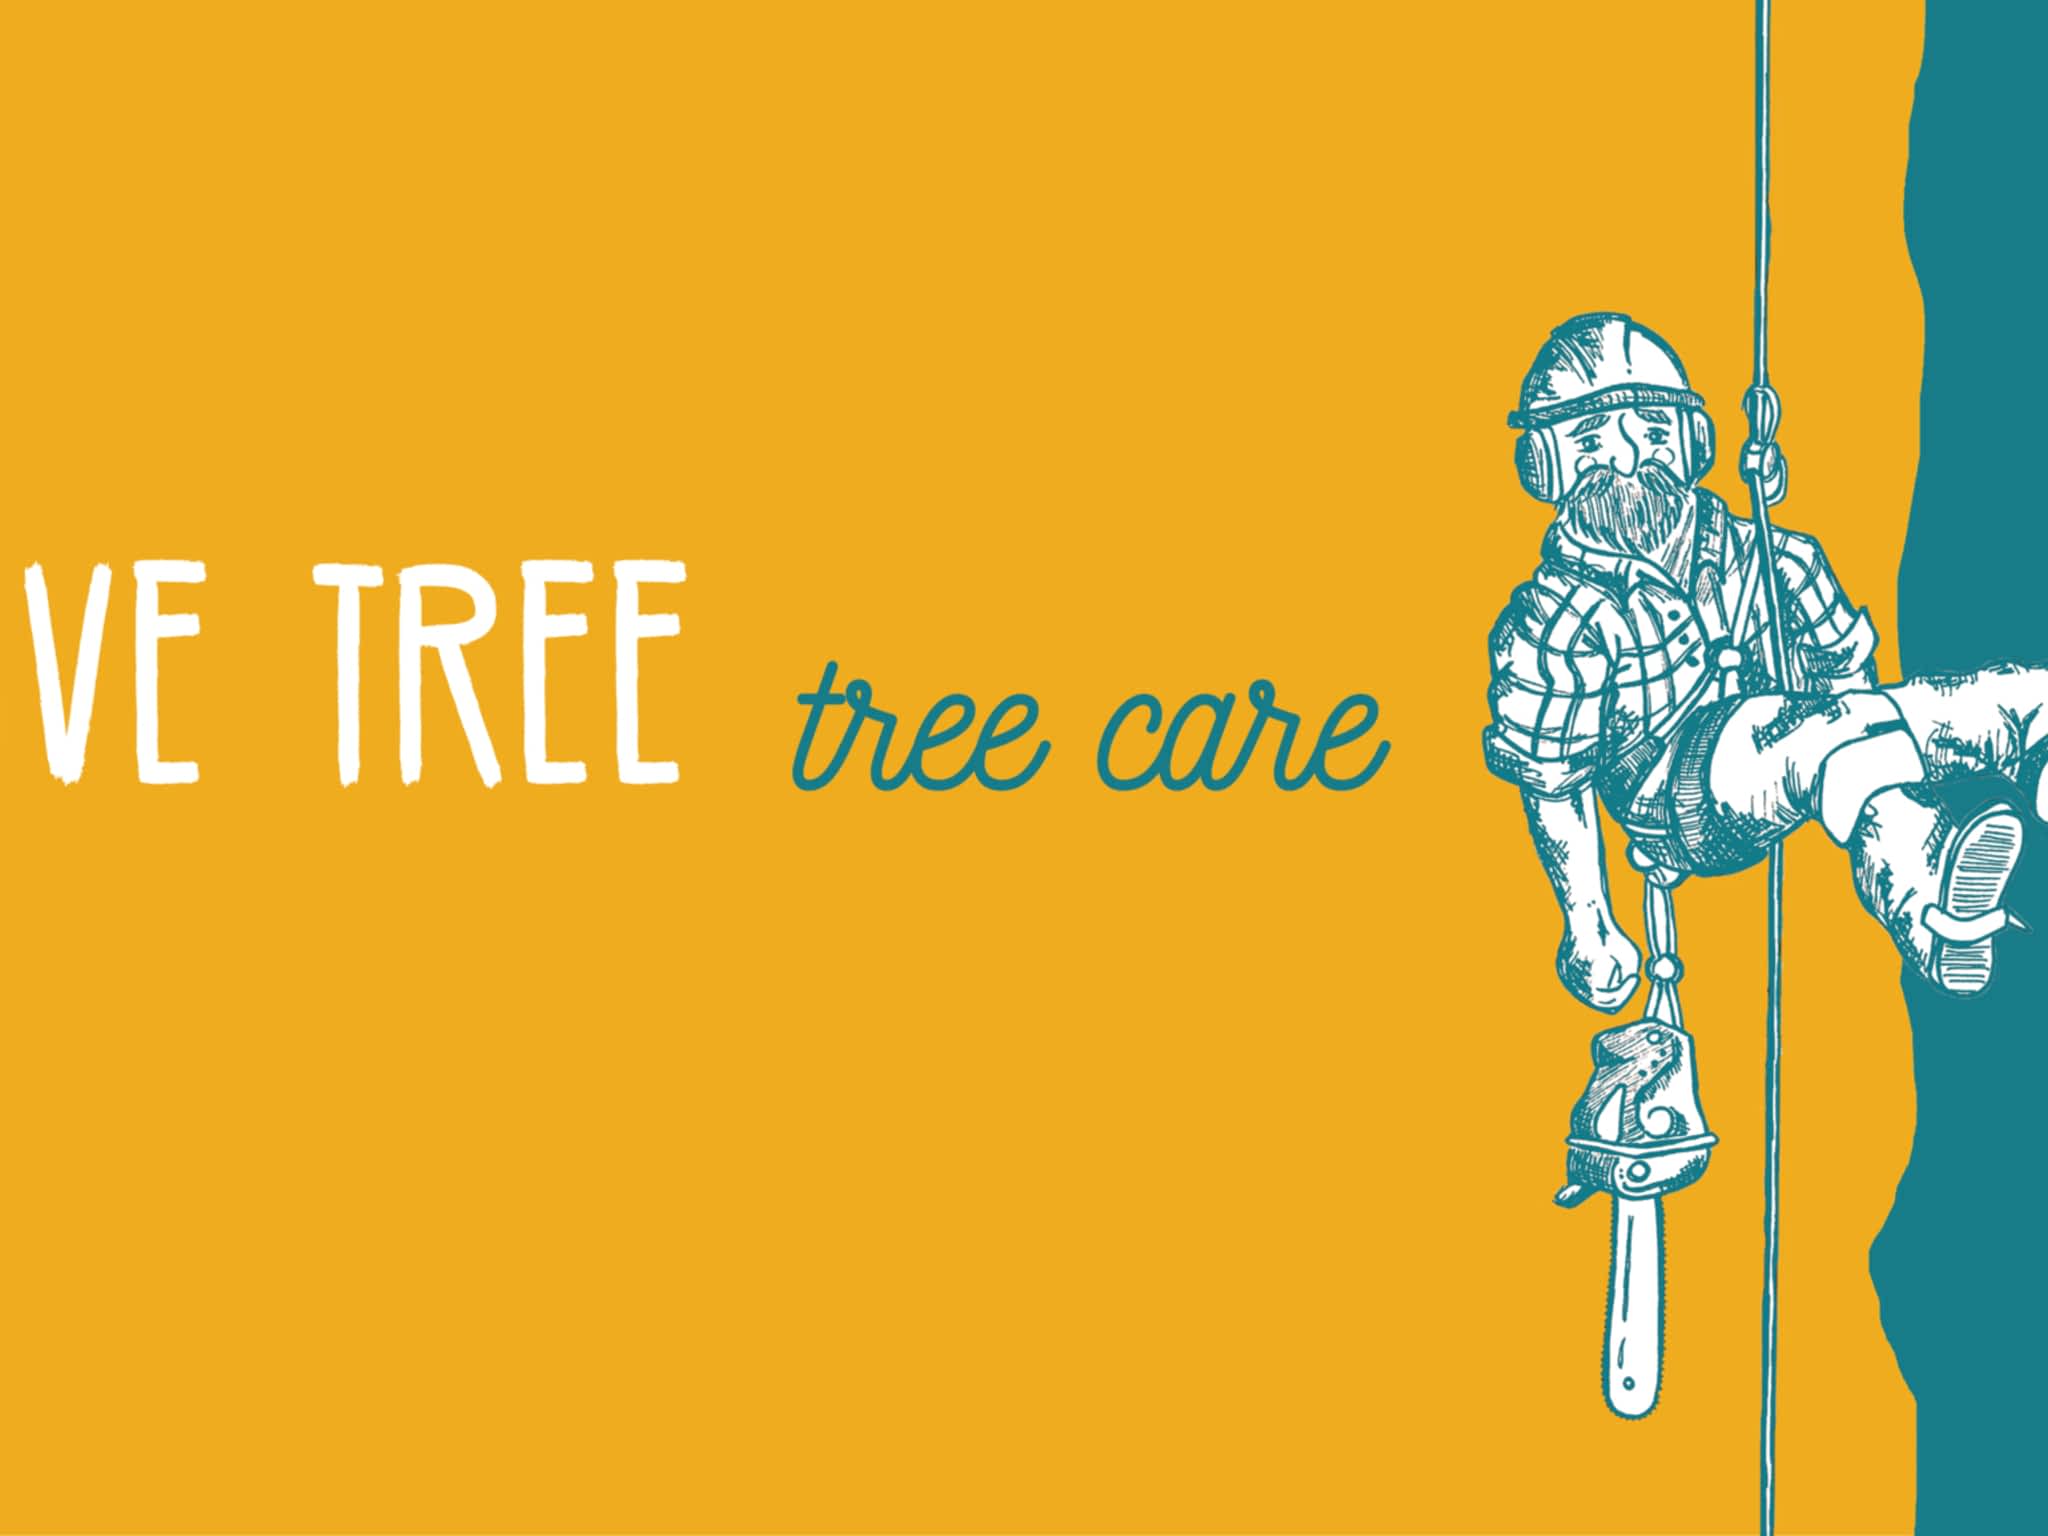 photo Live Tree Tree Care